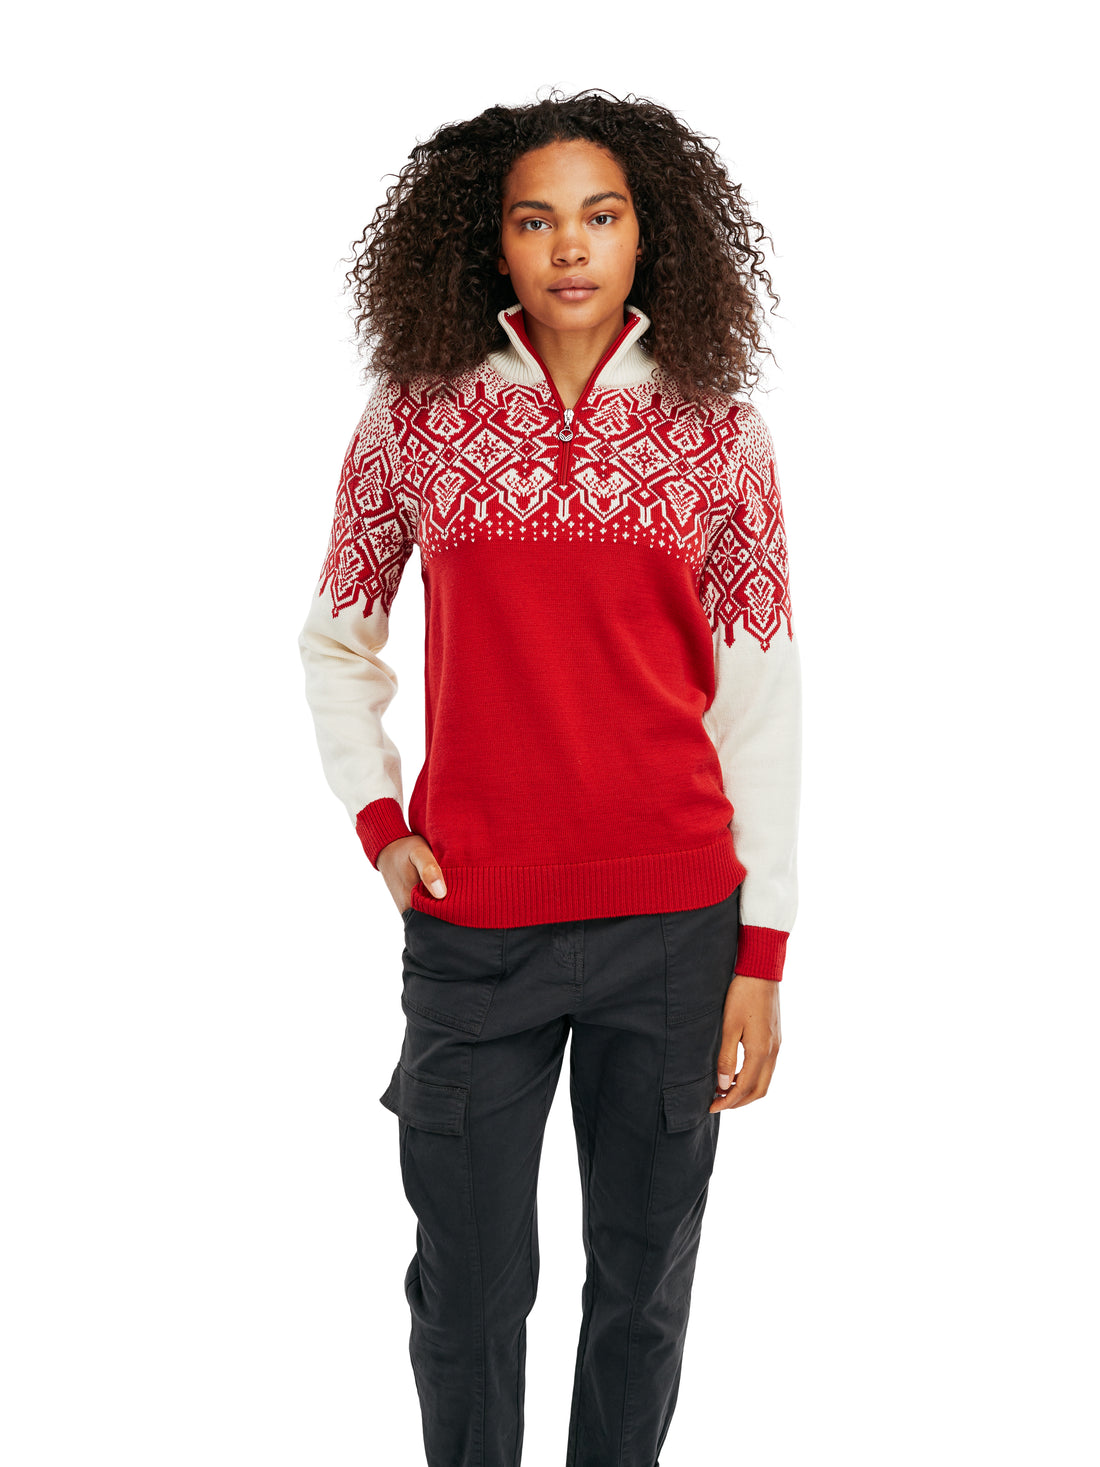 Dale of Norway - Winterland Women's Sweater - Raspberry